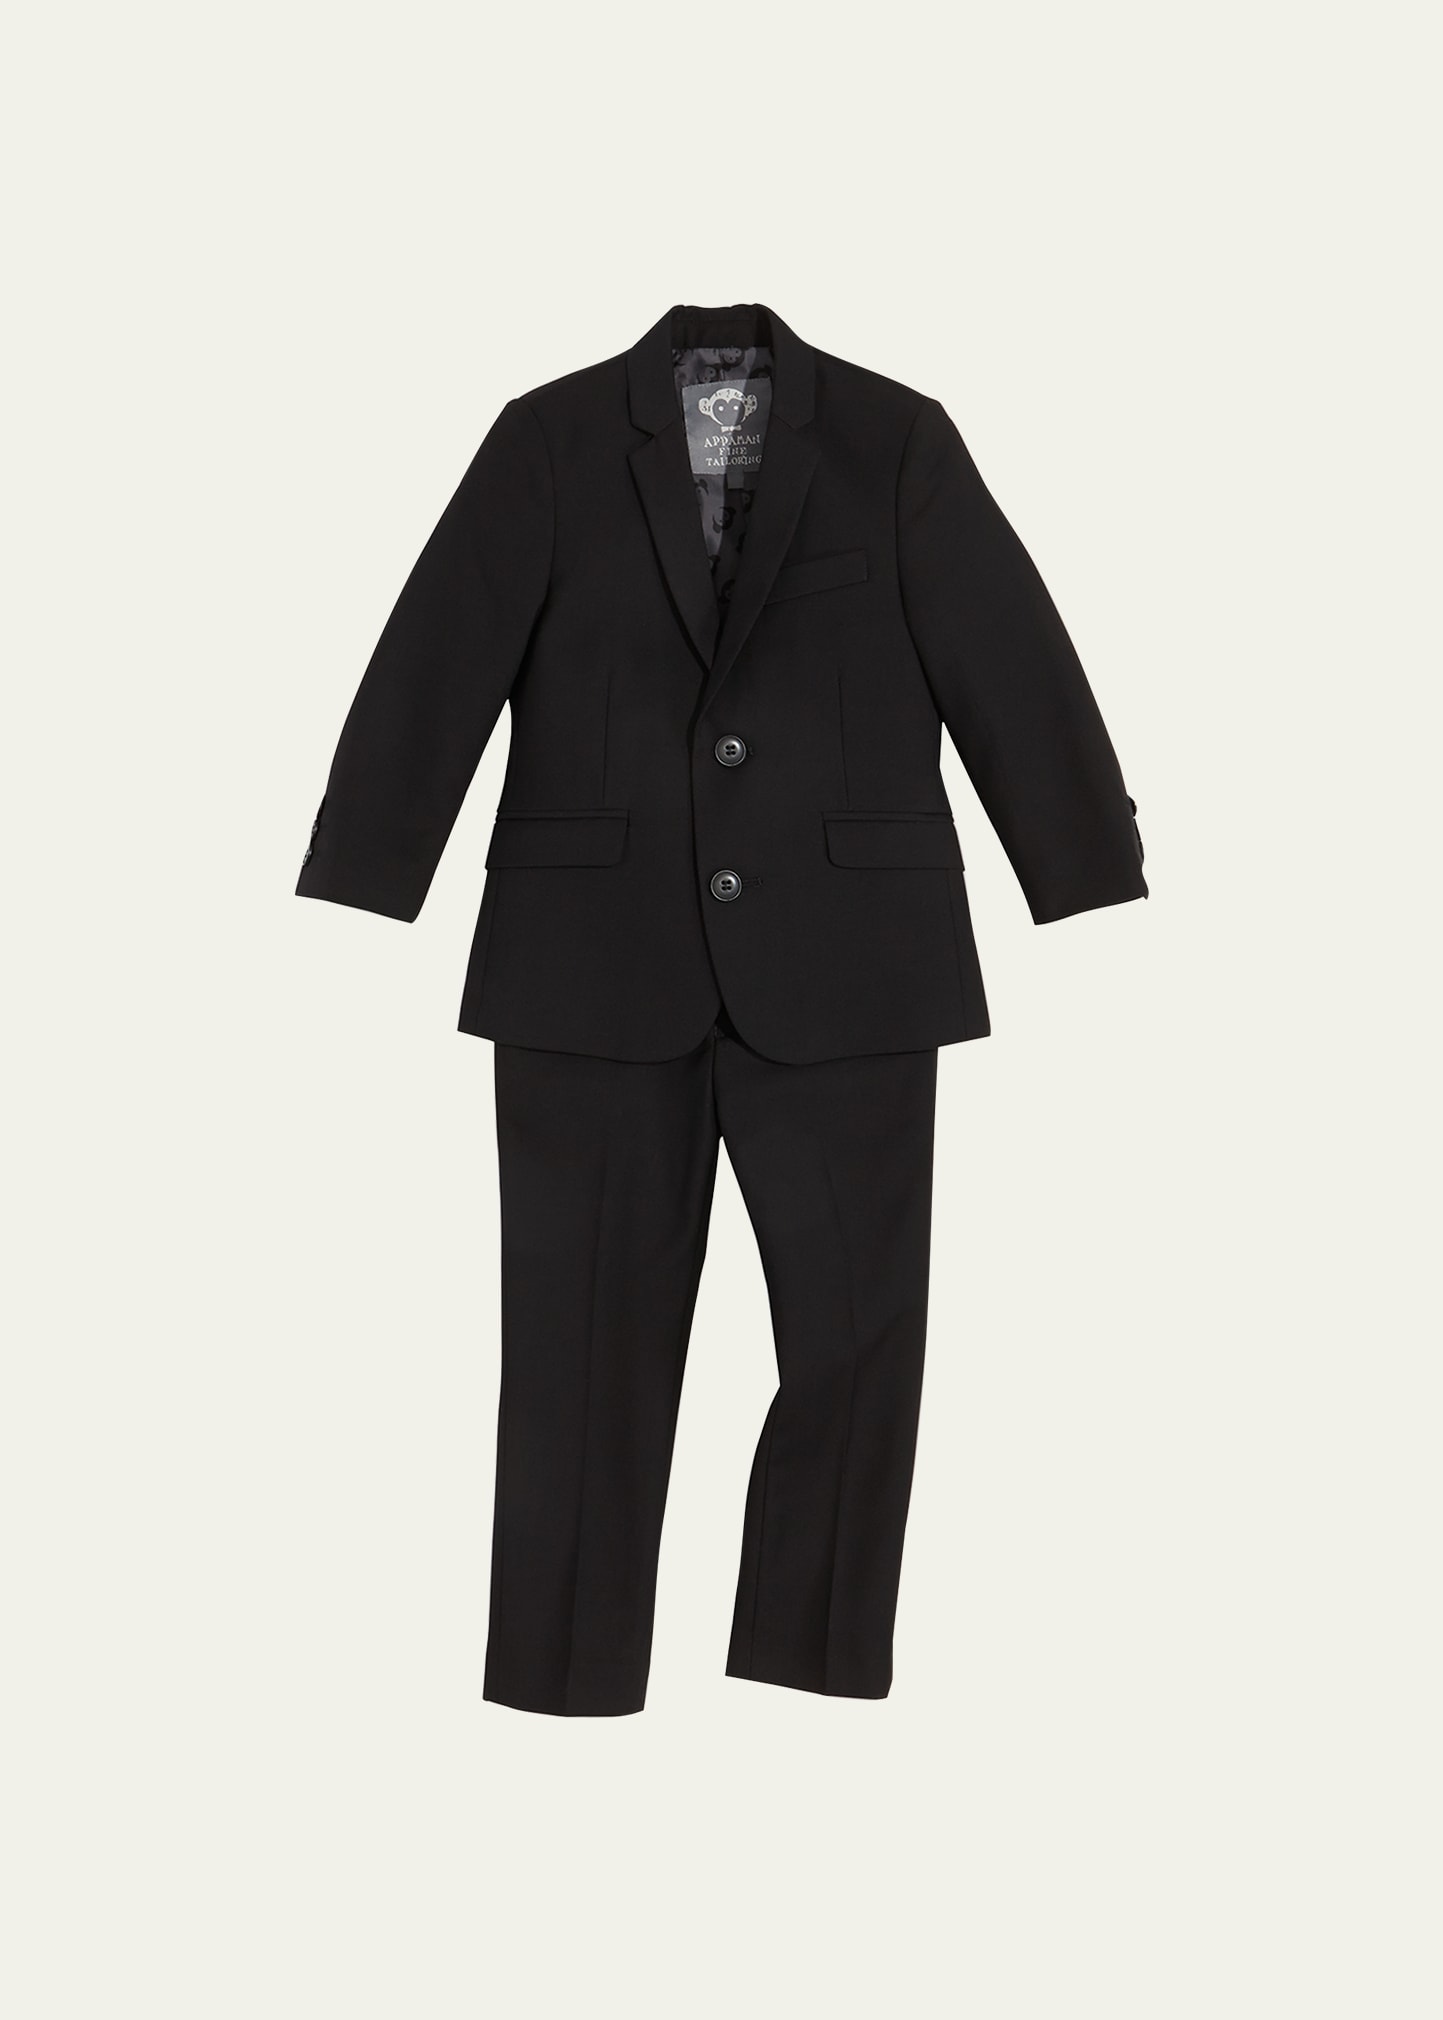 Appaman Boys' Two-Piece Mod Suit, Black, 2T-14